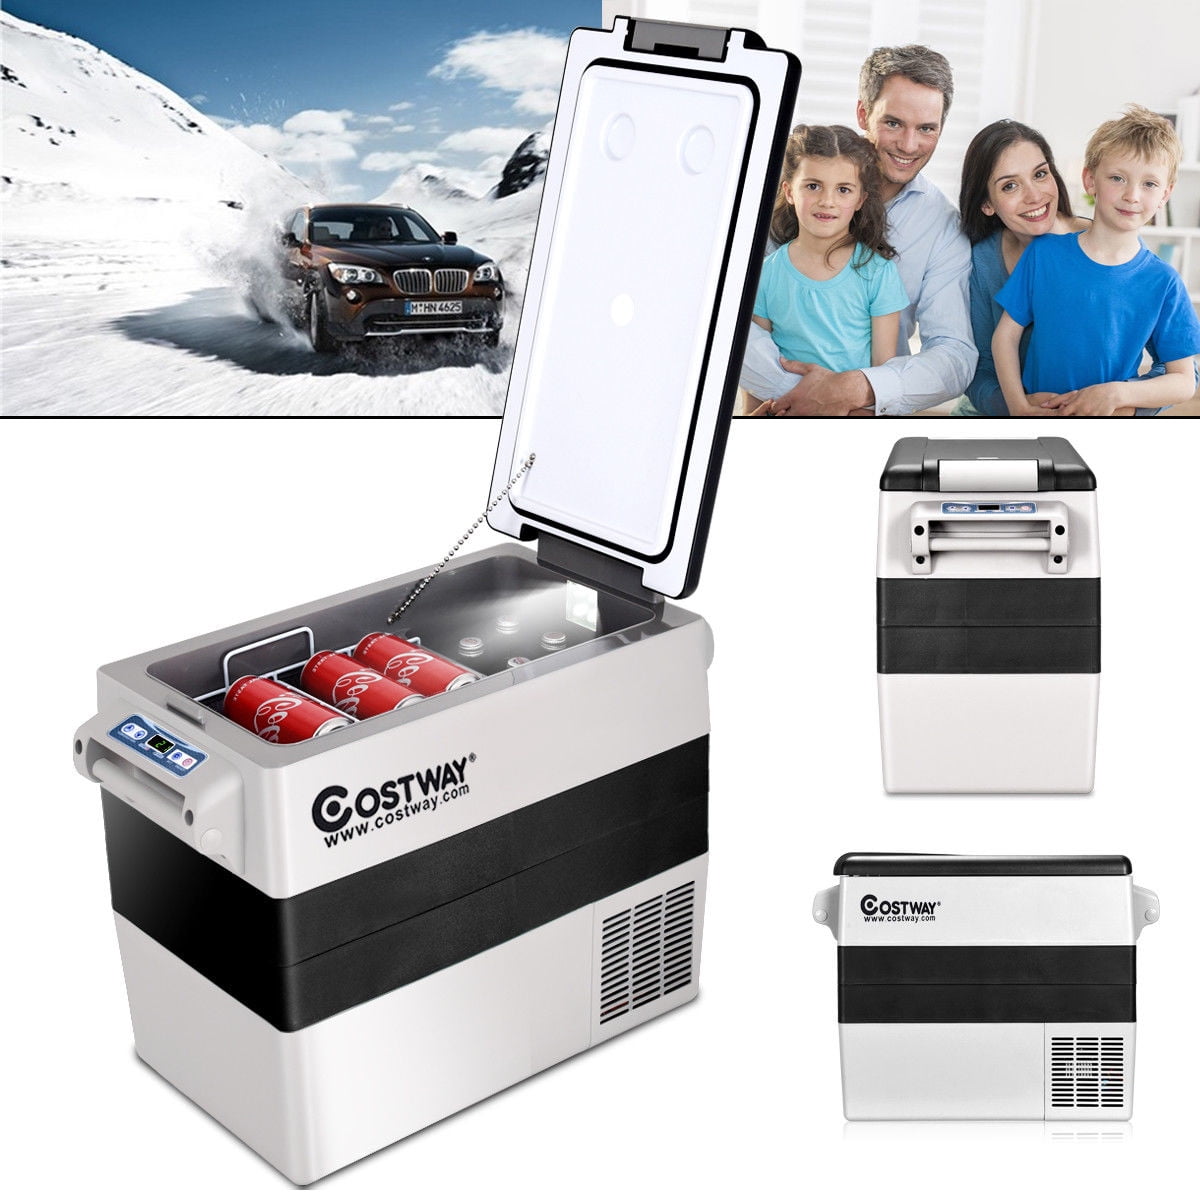 Costway 63-Quart Portable Electric Car Cooler Refrigerator/Freezer  Compressor Camping EP23708 - The Home Depot